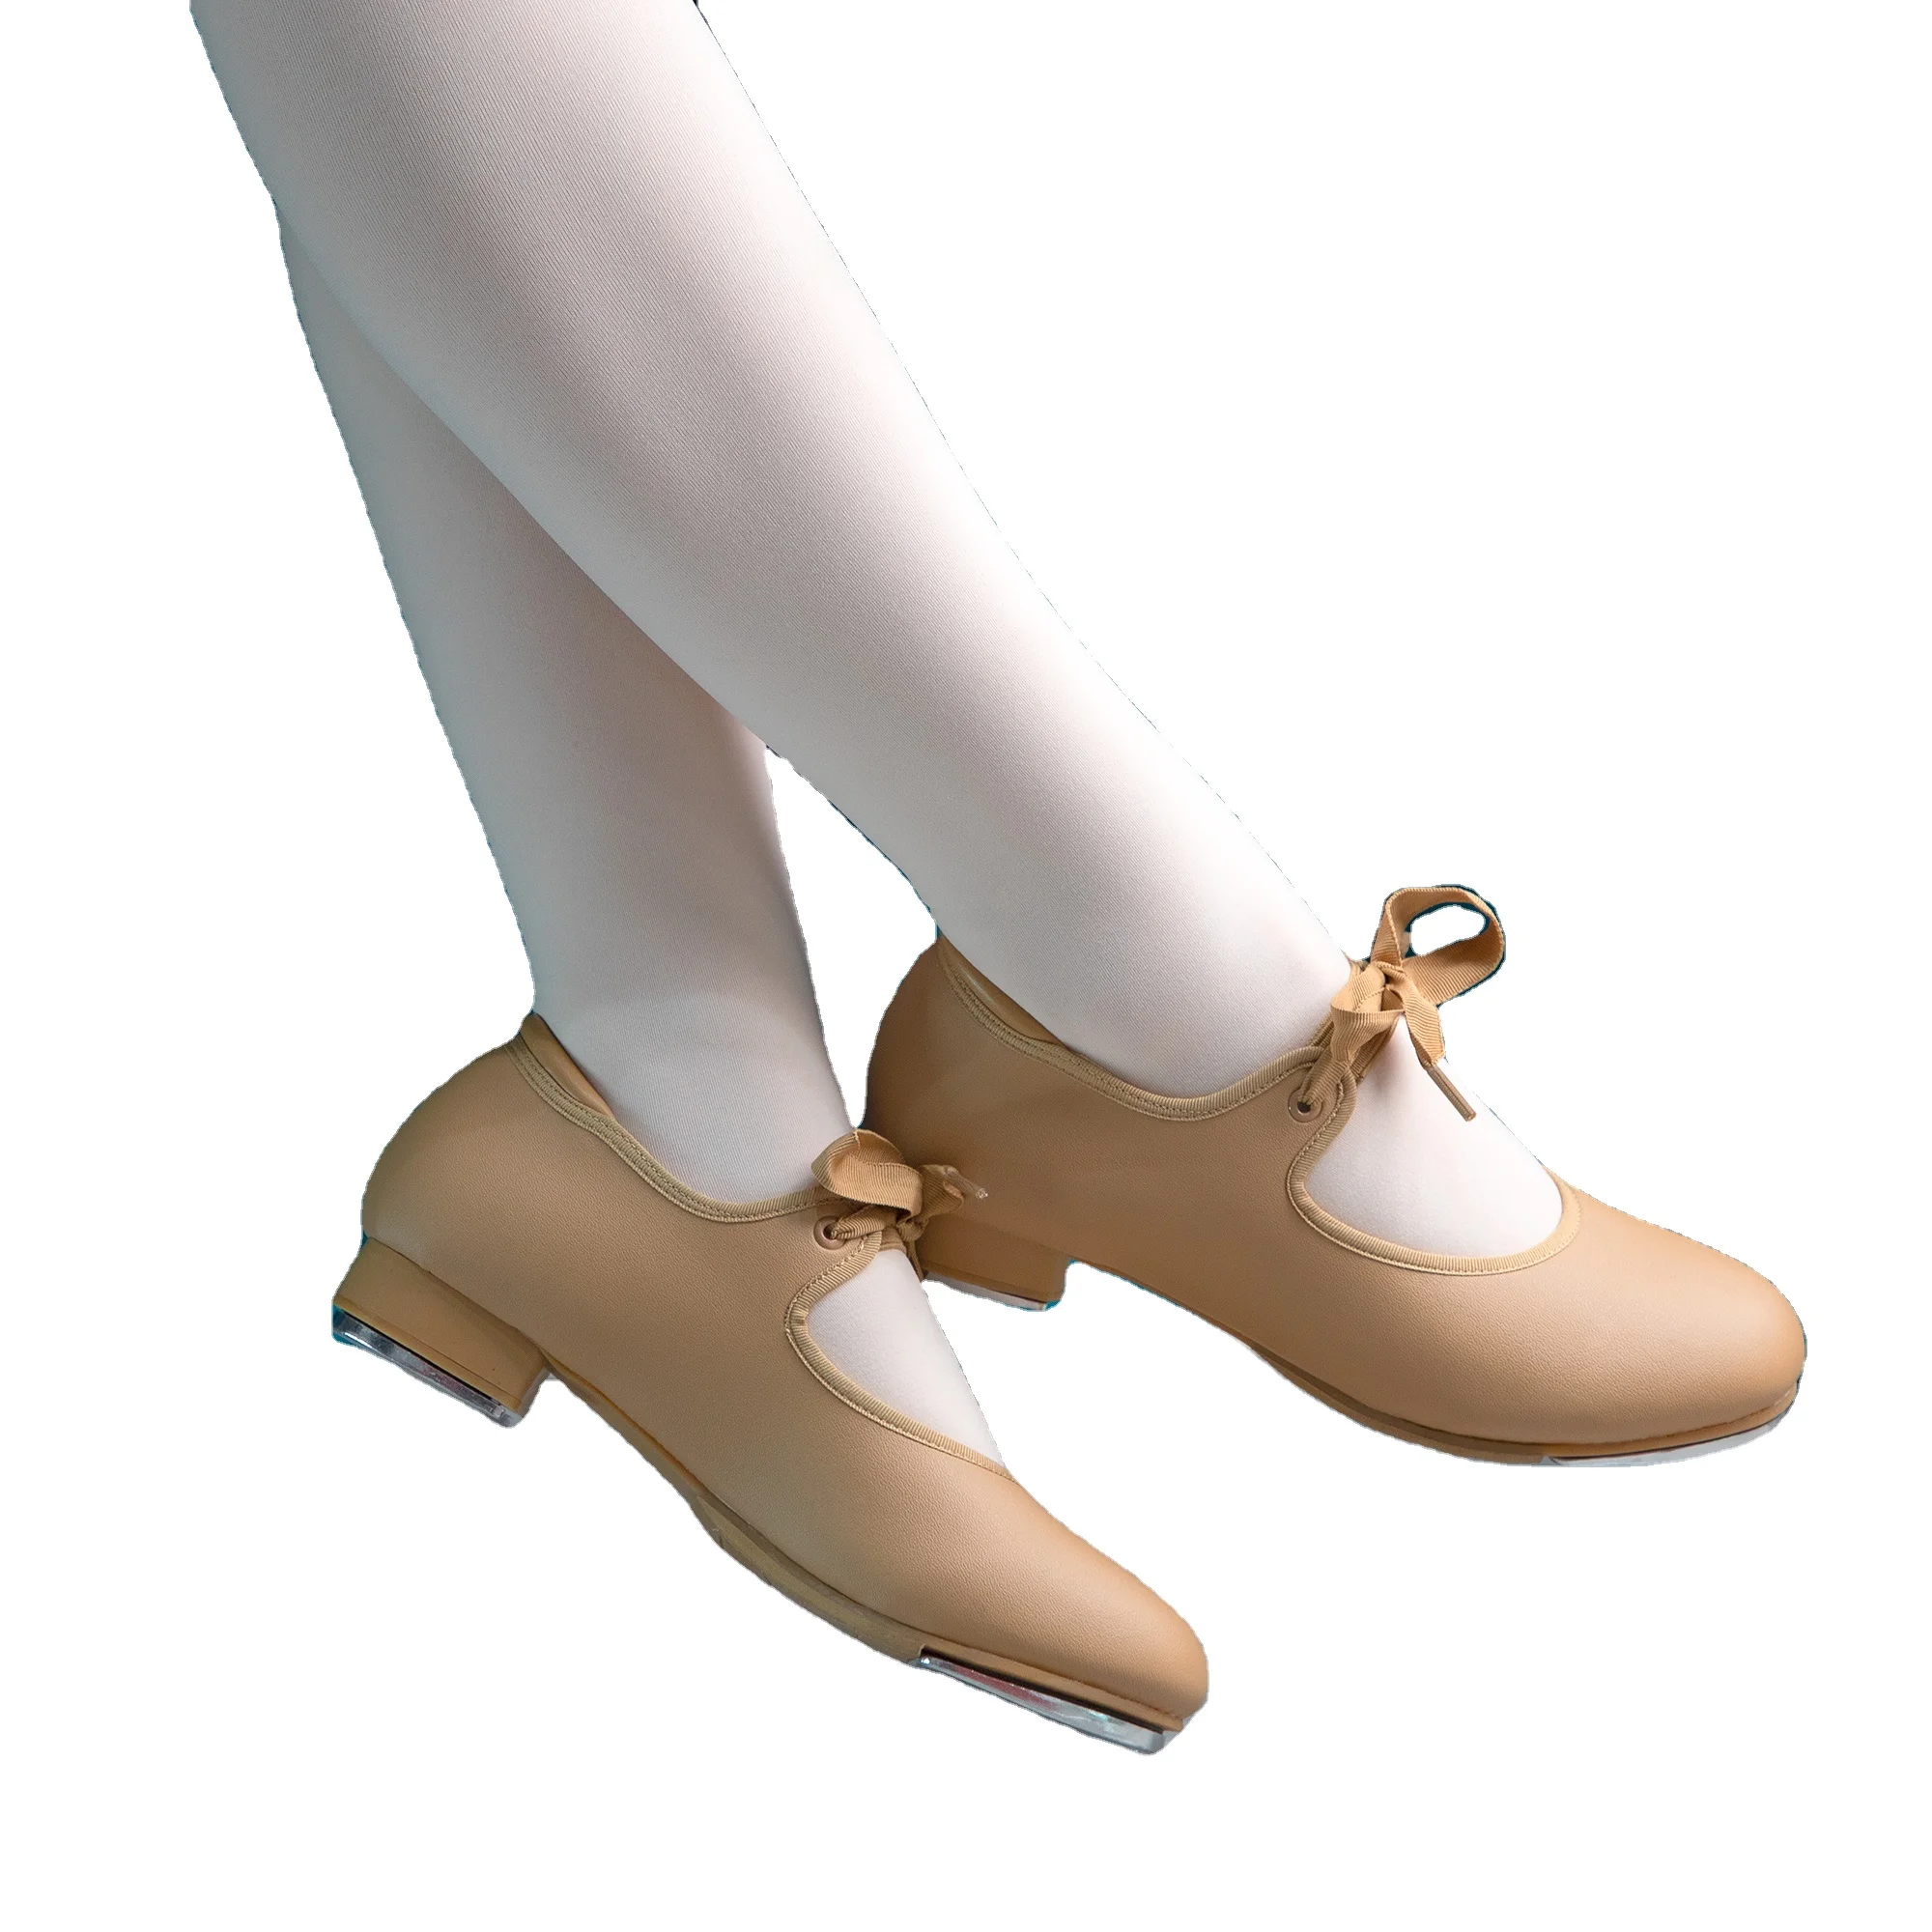 Dynadans-zapatos De Baile Con Suela Suave,Calzado Para Bailar - Buy Exótico Zapatos De Baile,Shuffle Zapatos De Baile,Zapatos De Tap Product on Alibaba.com